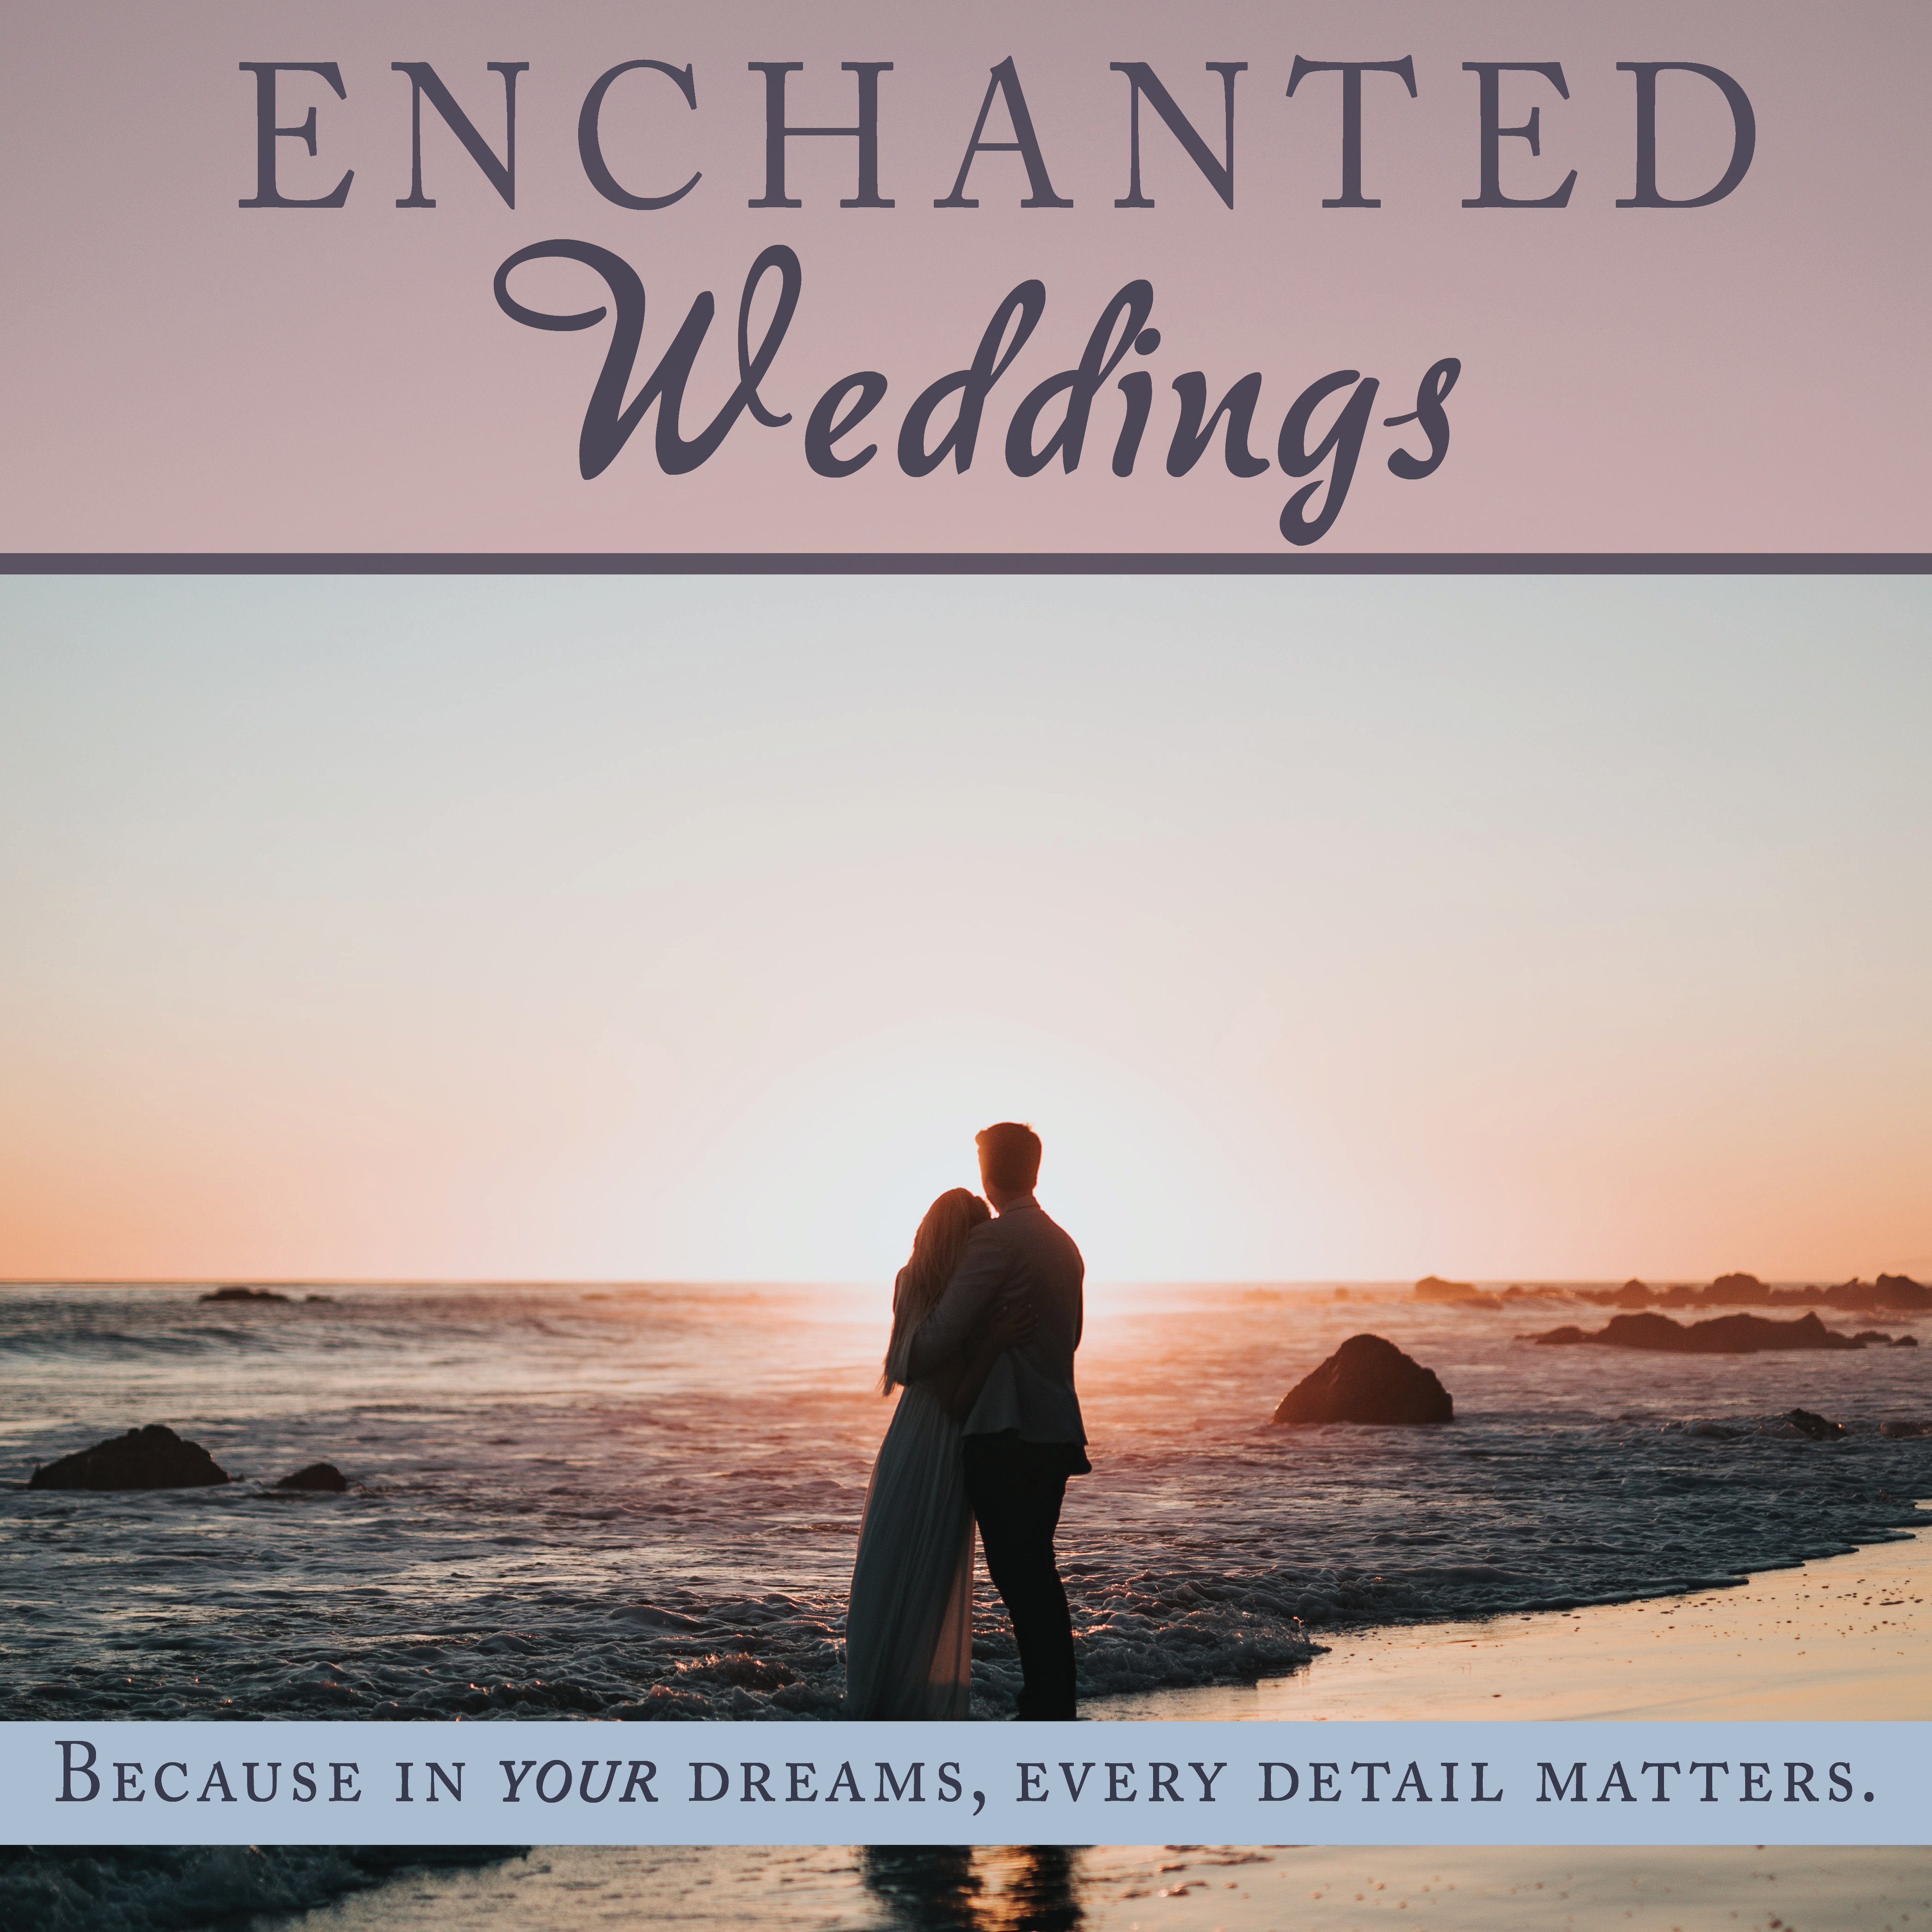 Social Media post for Enchanted Weddings. 

Photo Credit: Nathan Dumlao (on Unsplash)